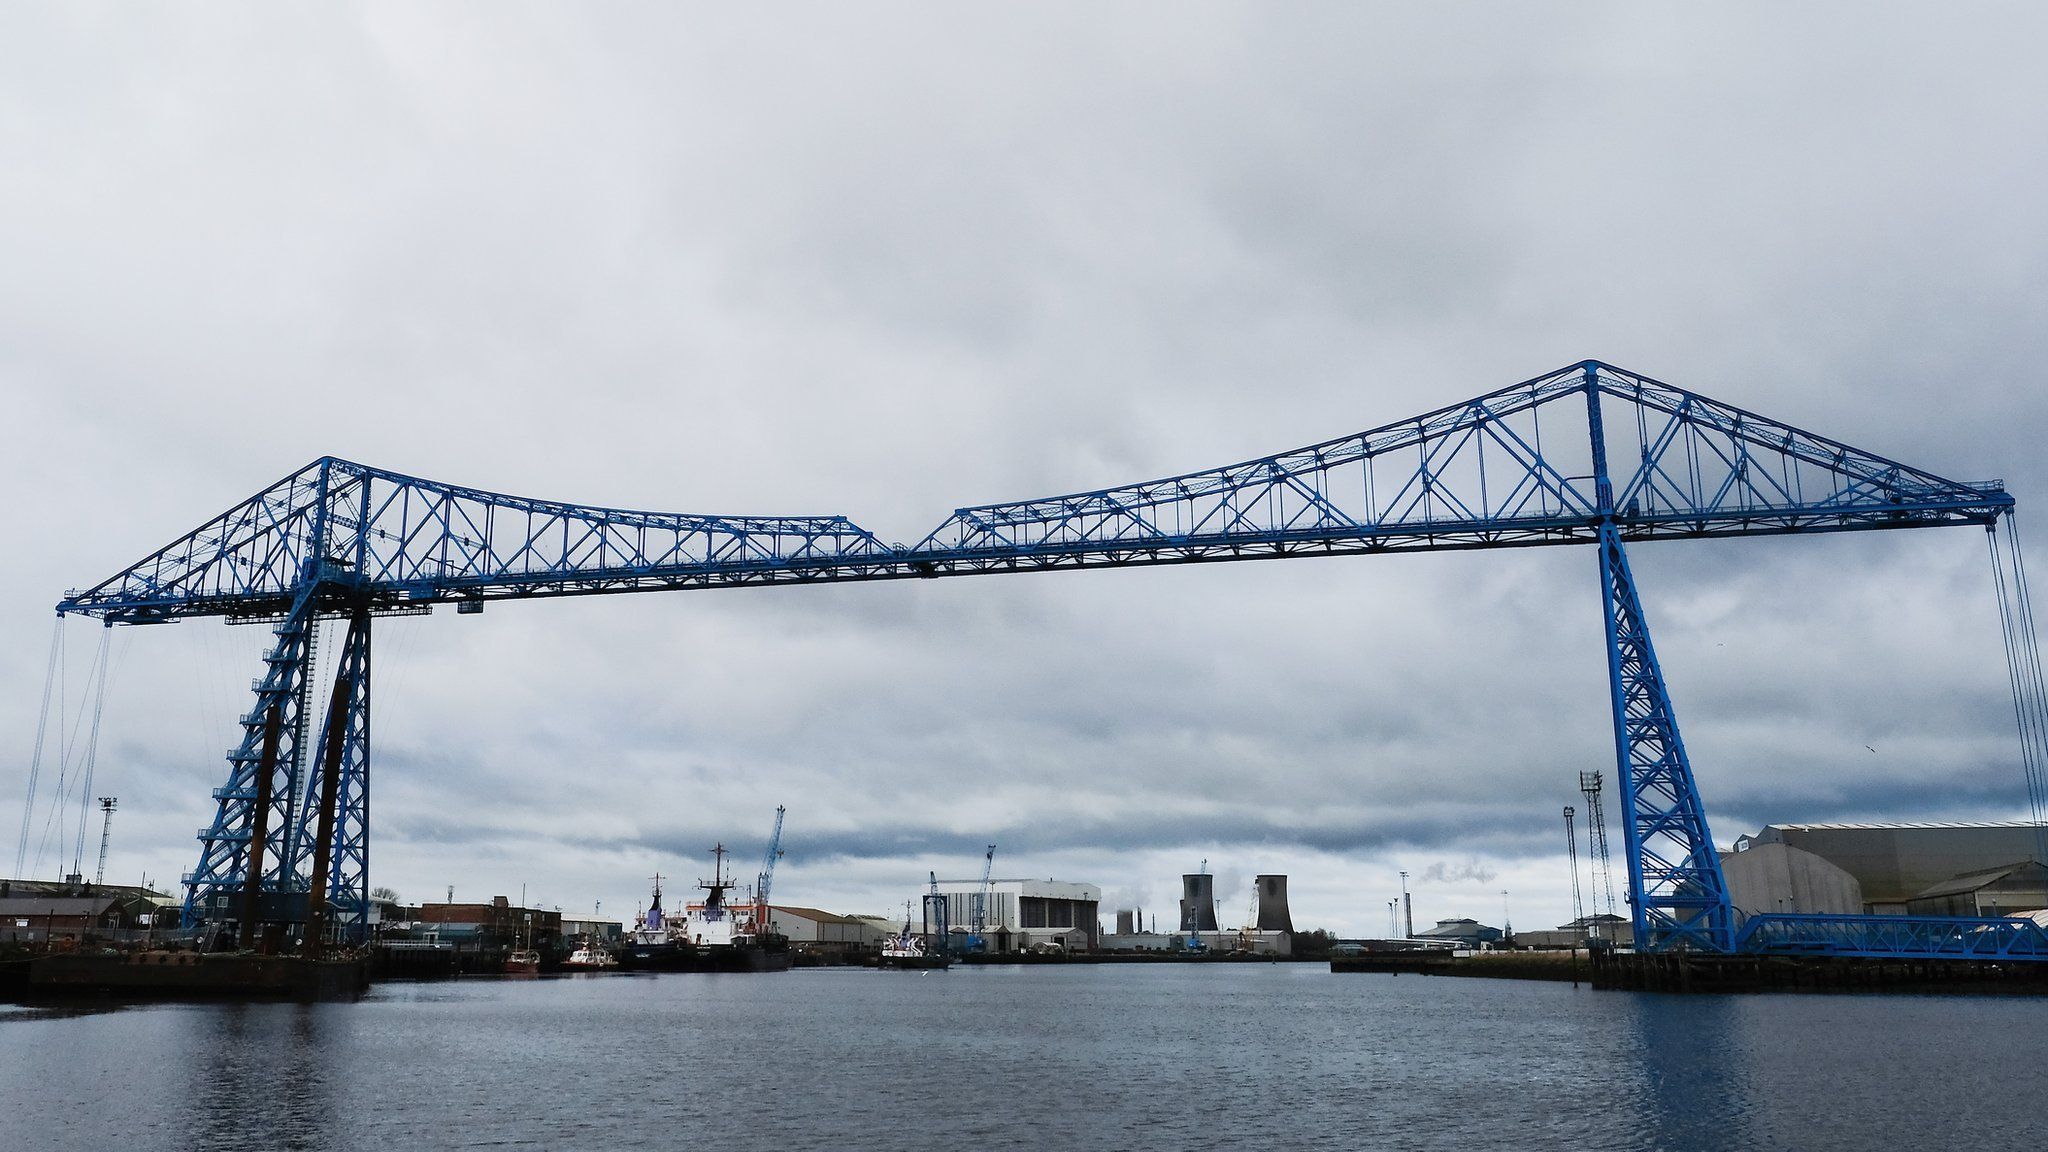 The Middlesbrough Transporter Bridge